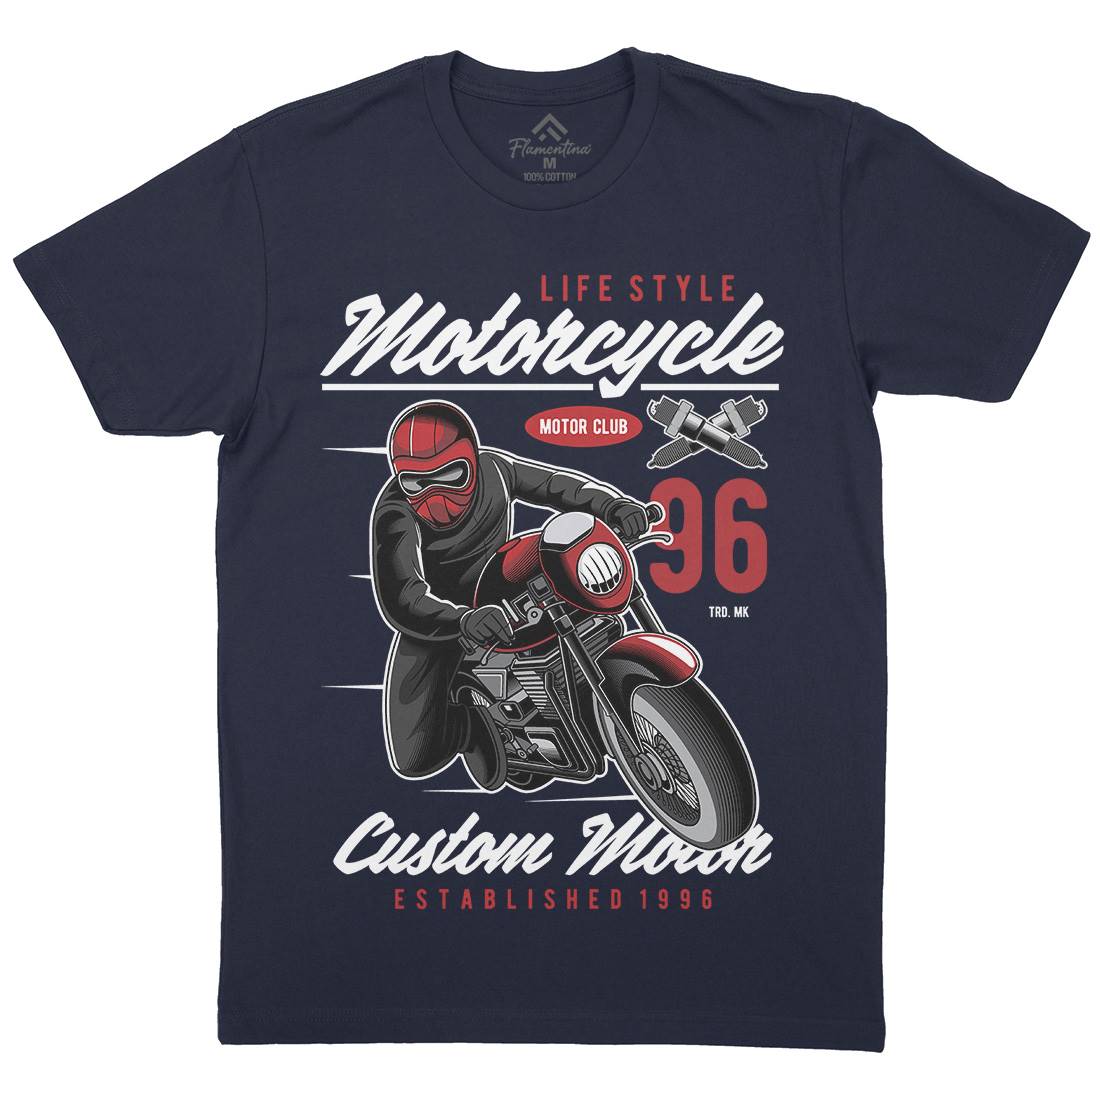 Lifestyle Mens Crew Neck T-Shirt Motorcycles C399